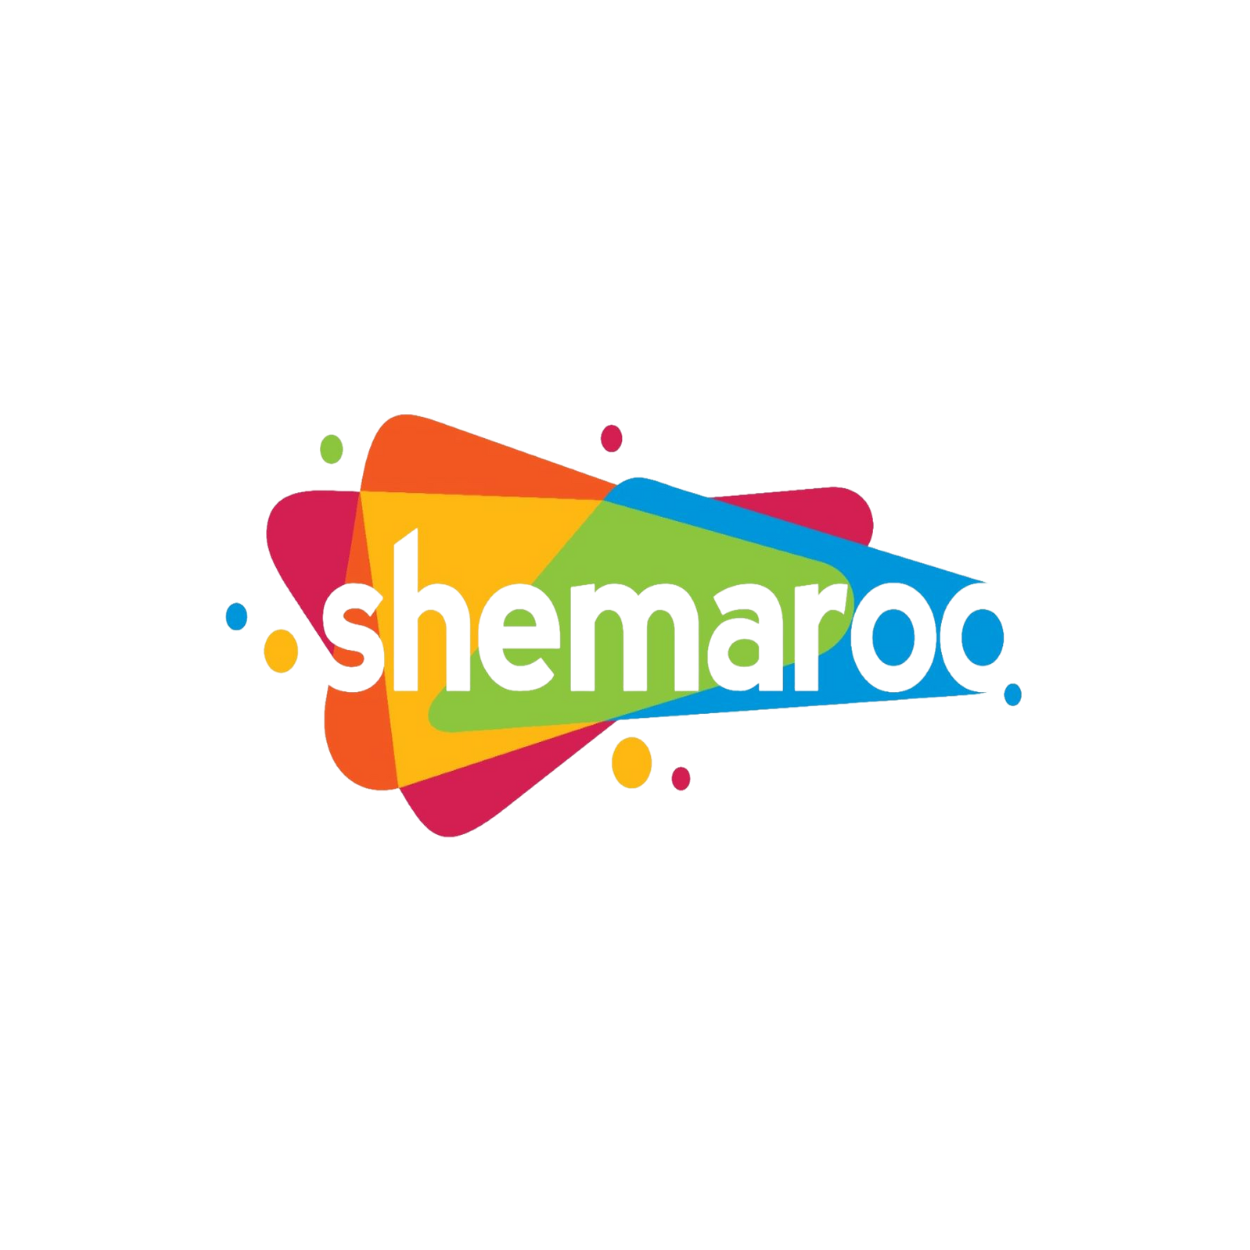 shemaroo logo